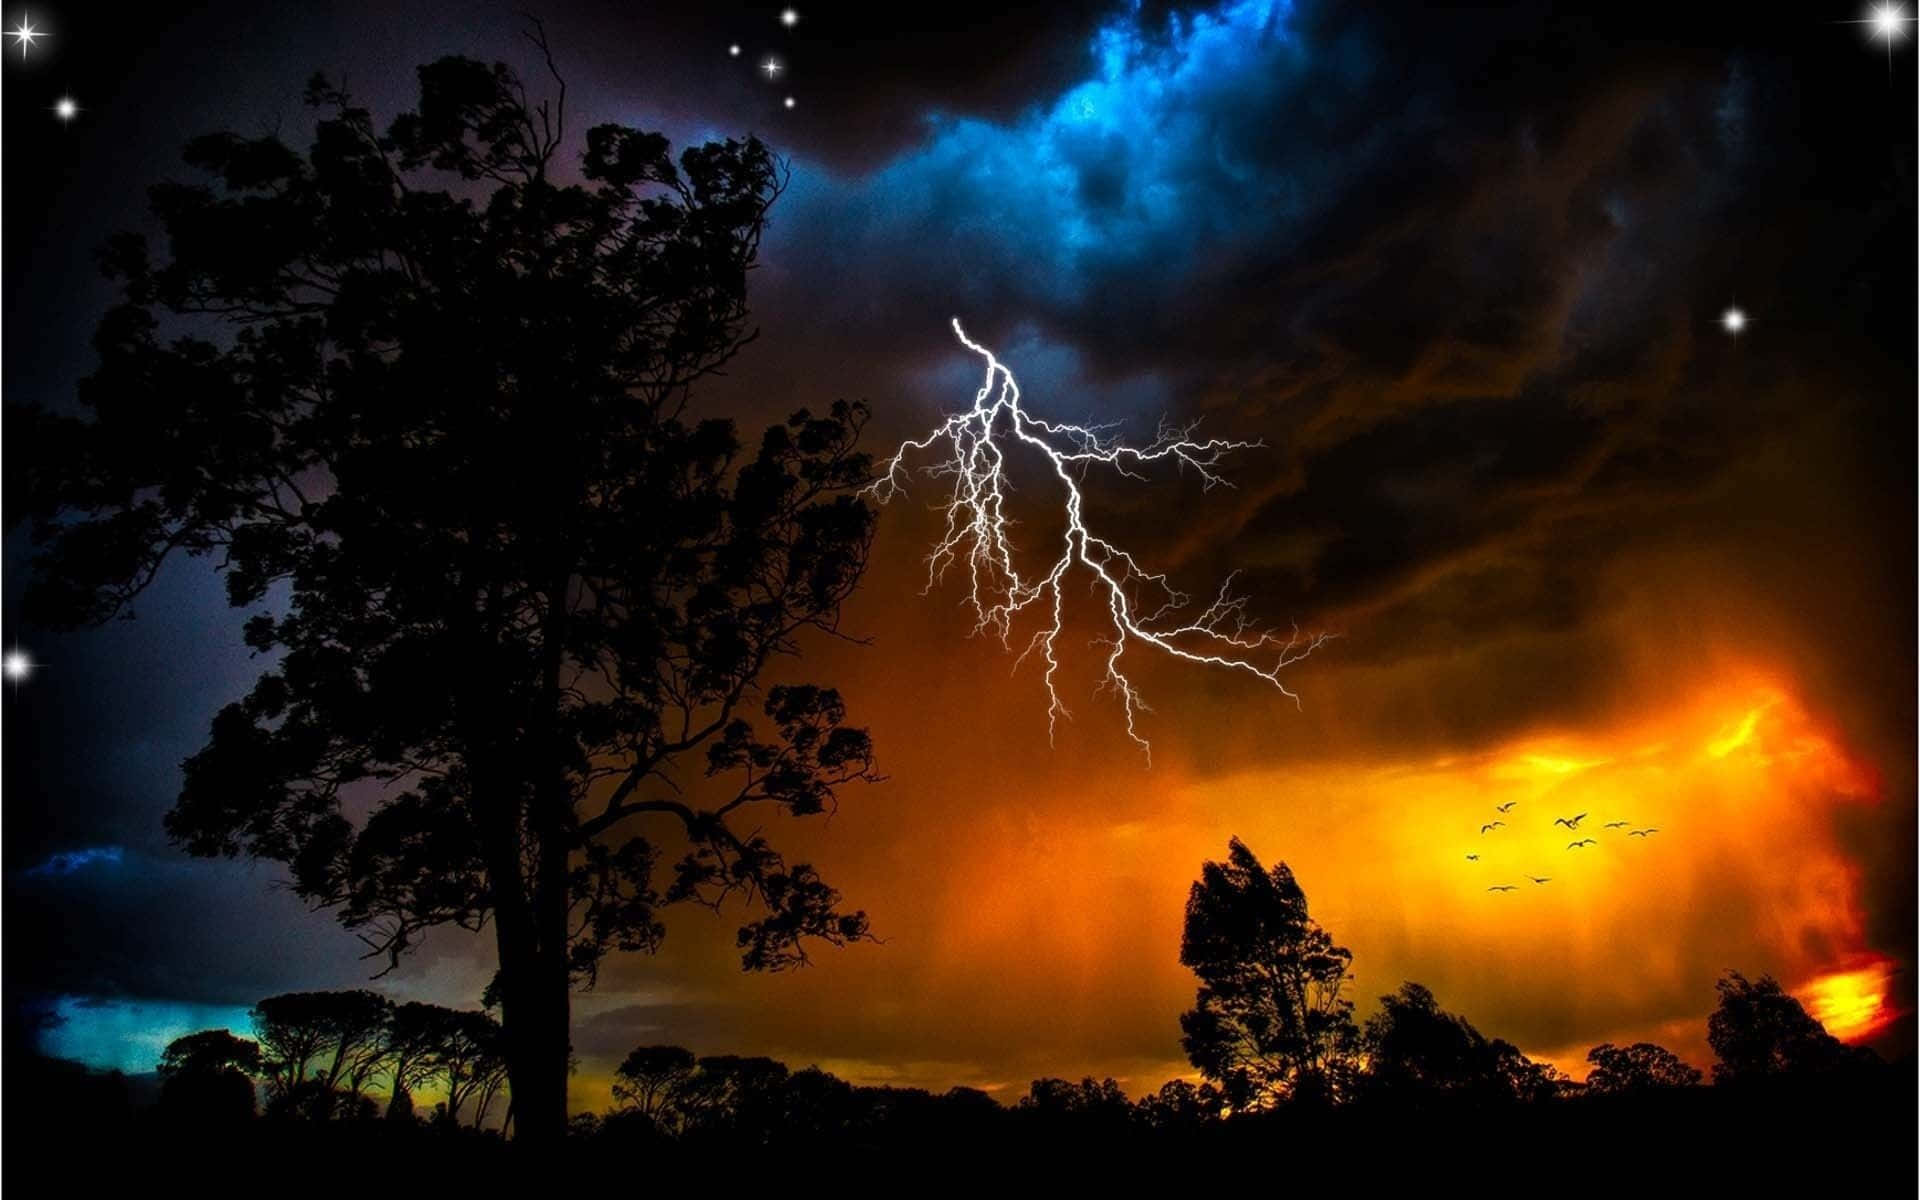 A beautiful night sky illuminated by a bright lightning bolt